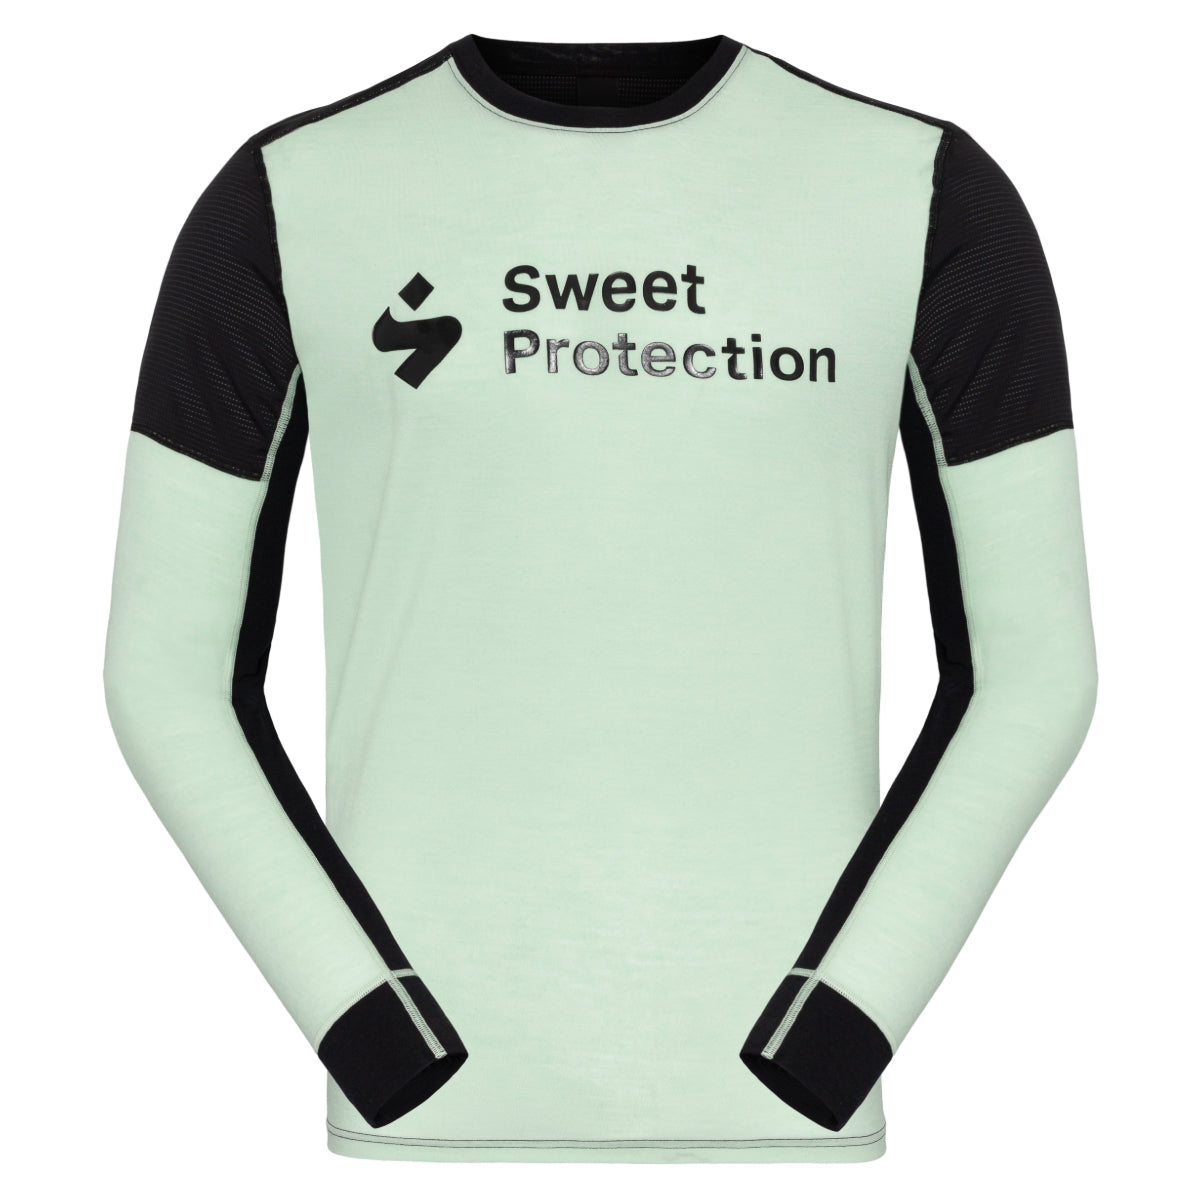 Sweet Protection - Men's Hunter Merino Hybrid LS Jersey - Turquoise